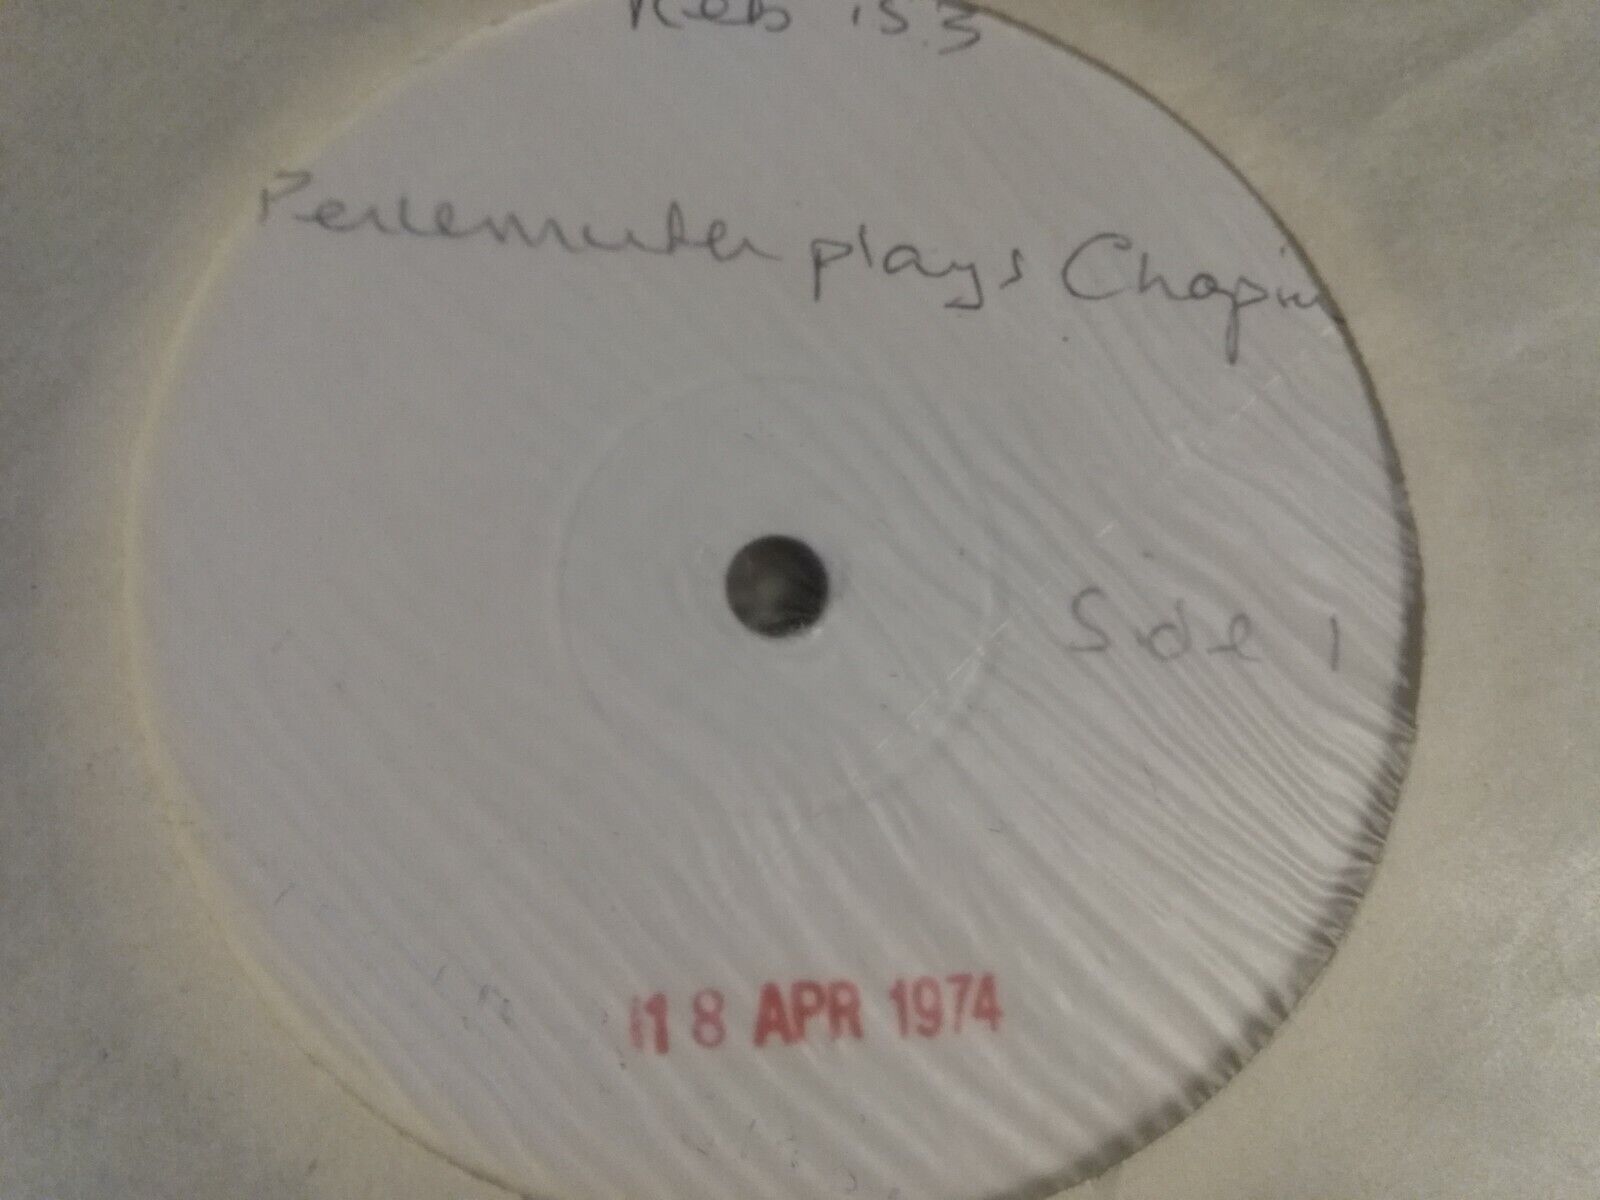 Pic 3 Perlemuter Plays Chopin Vlado Perlemuter  BBC Records REB 153 S test copy NM